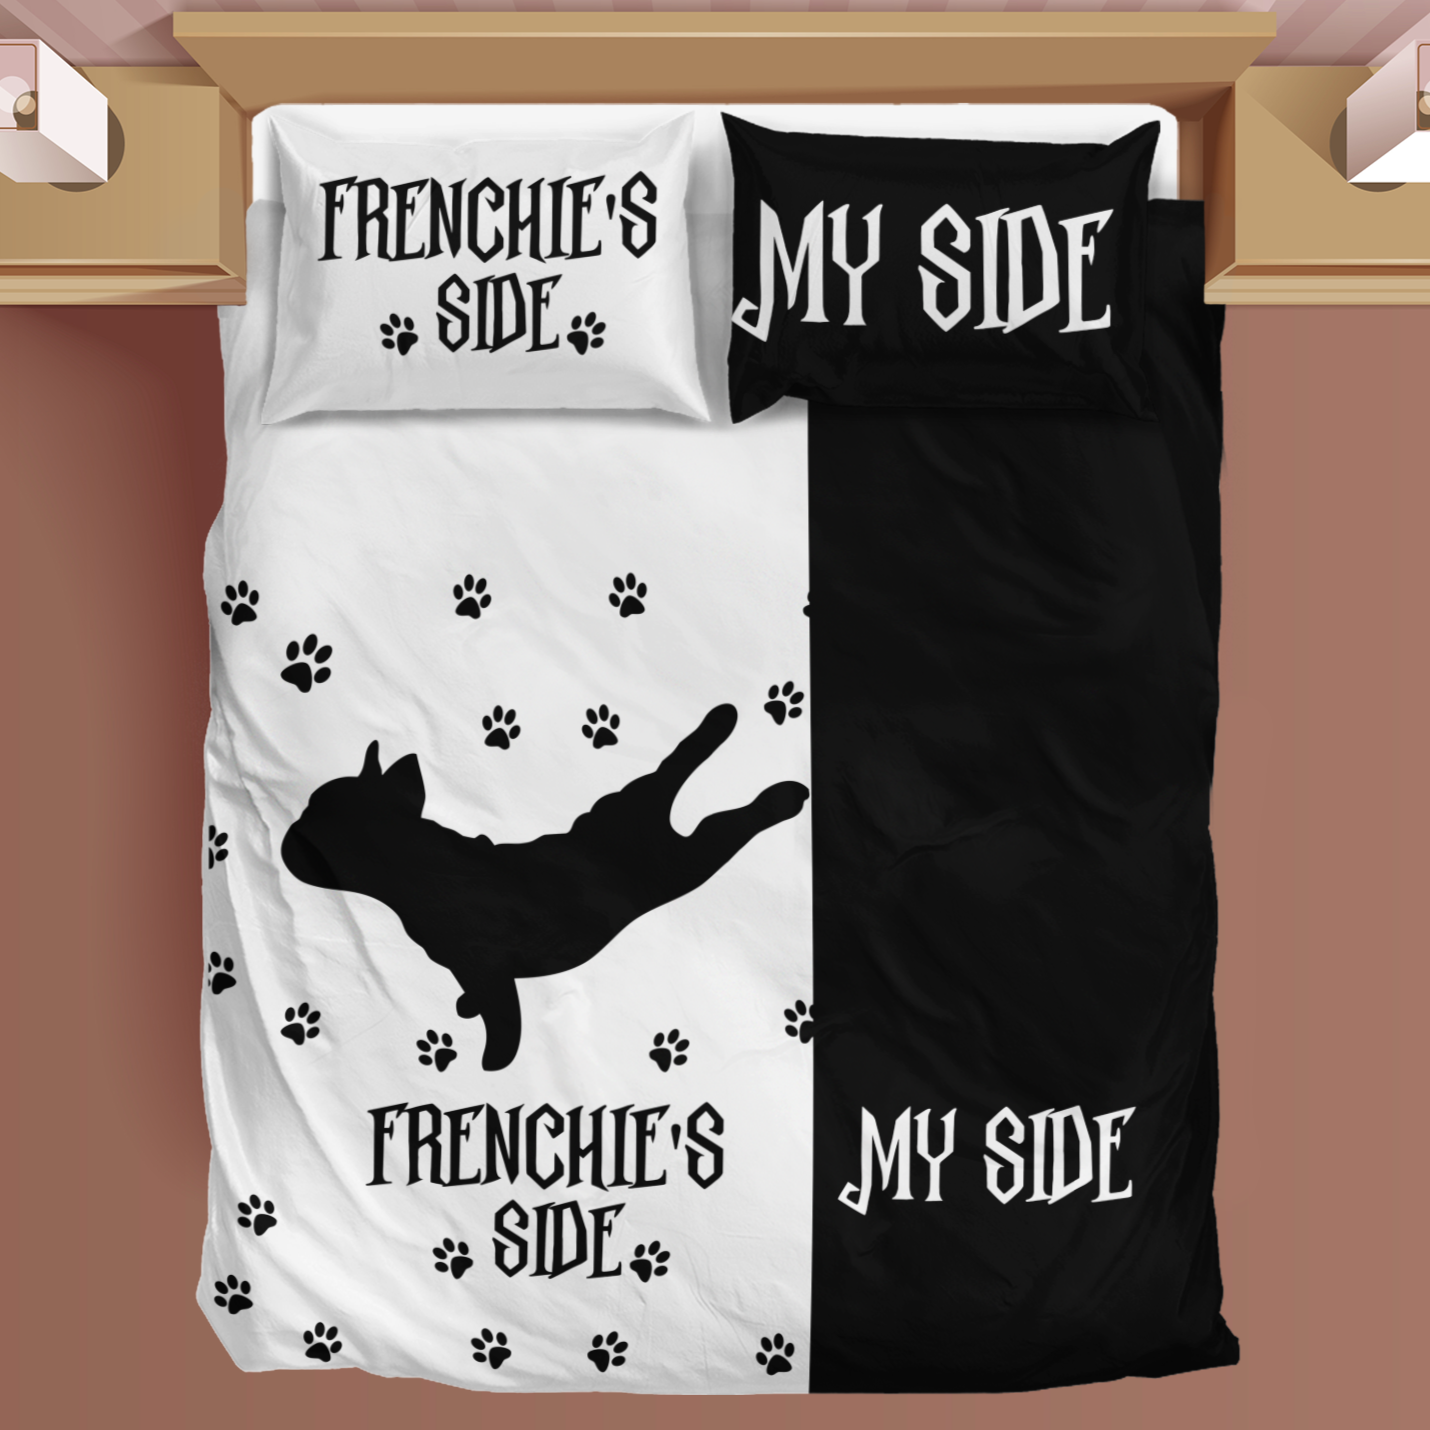 Frenchie's Side - Bedding set